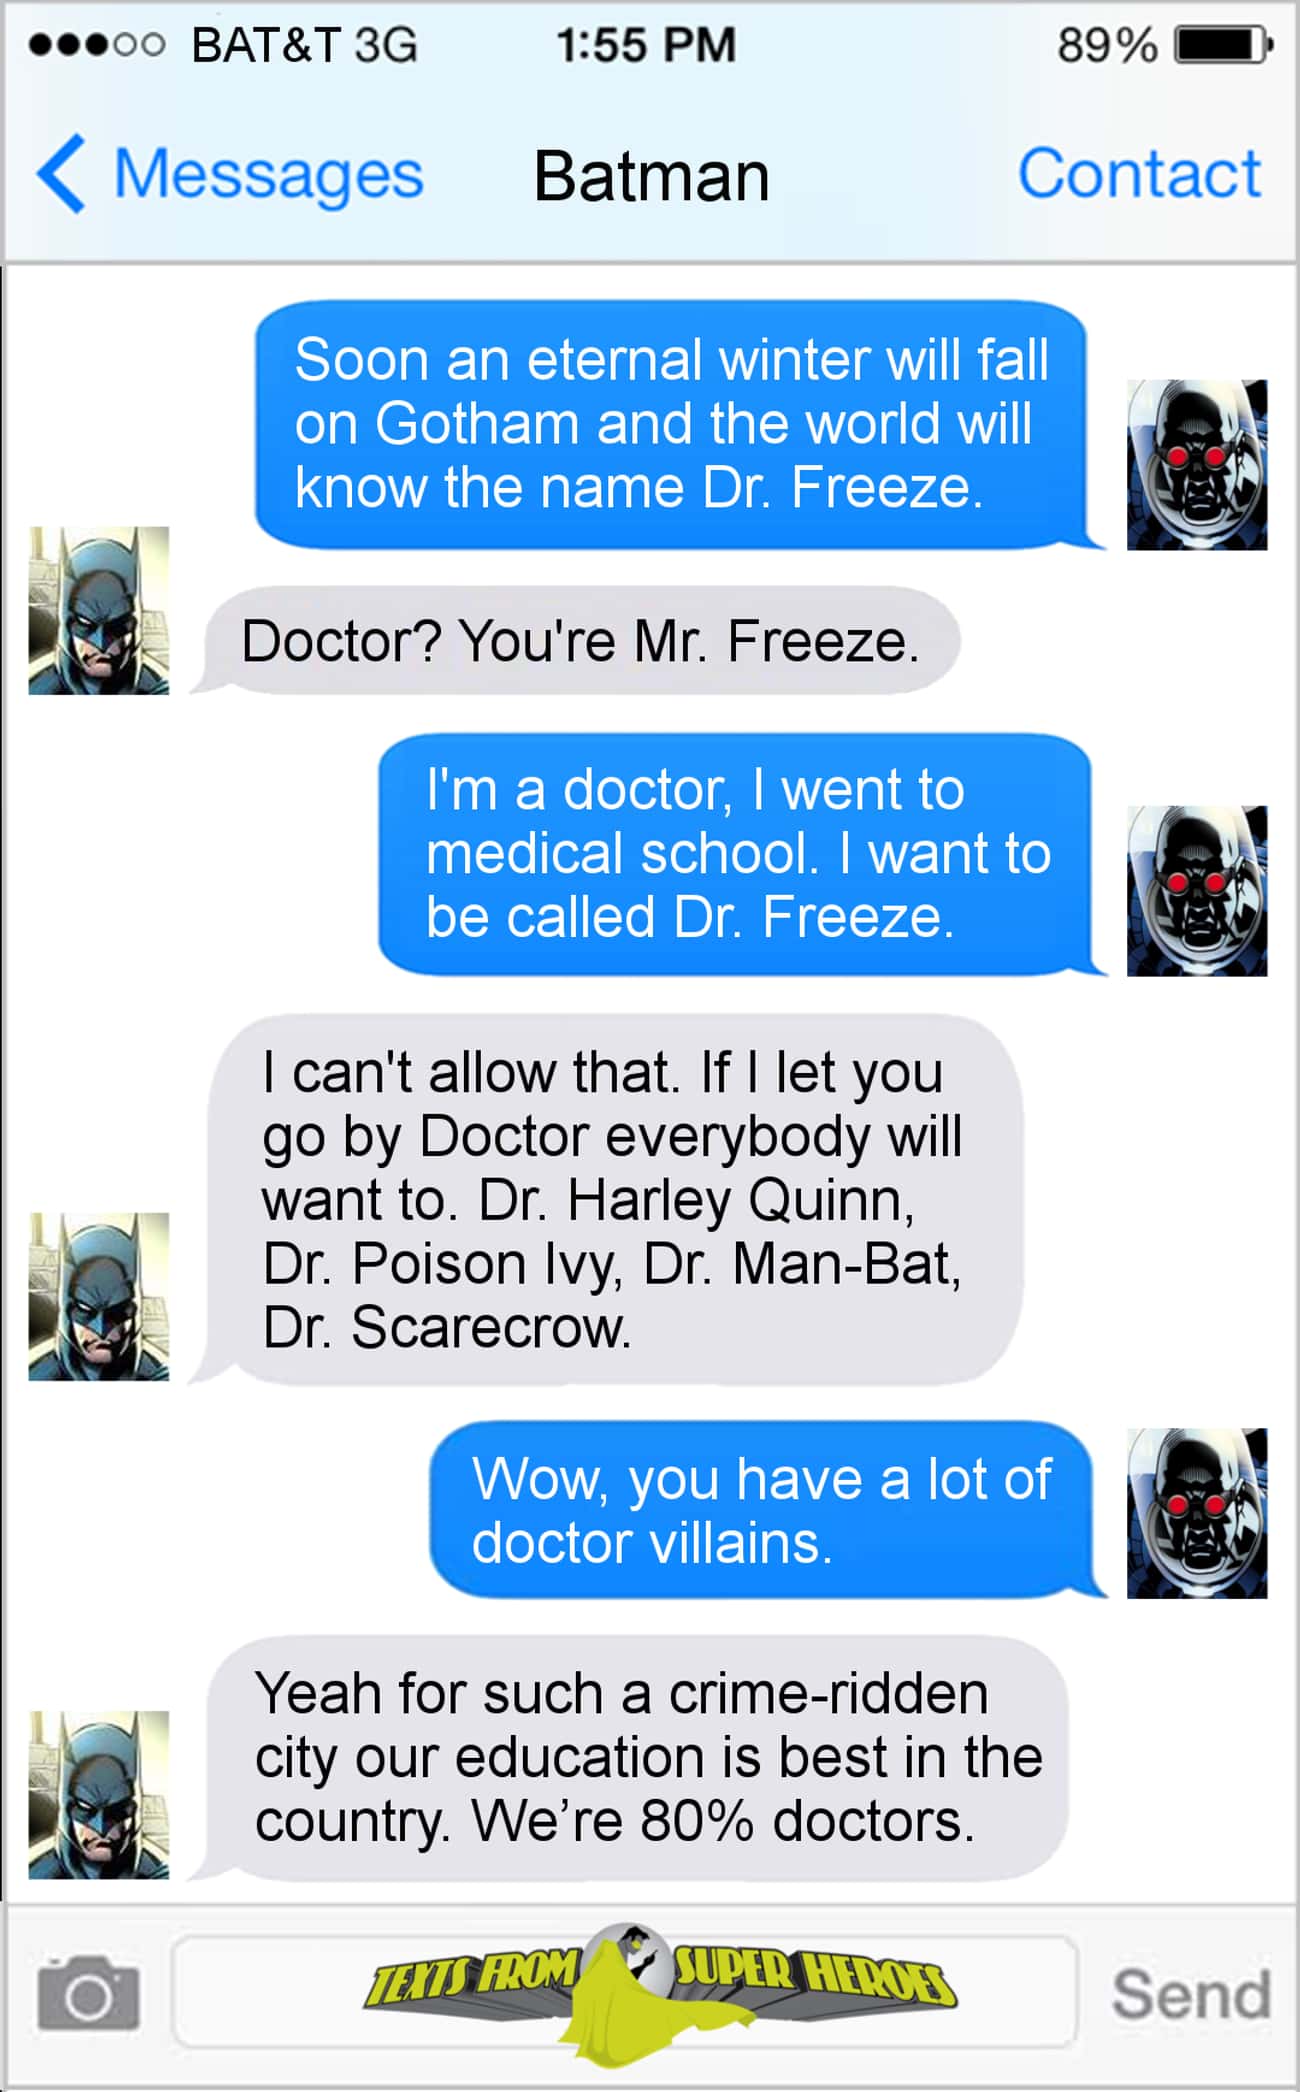 Dr. Freeze